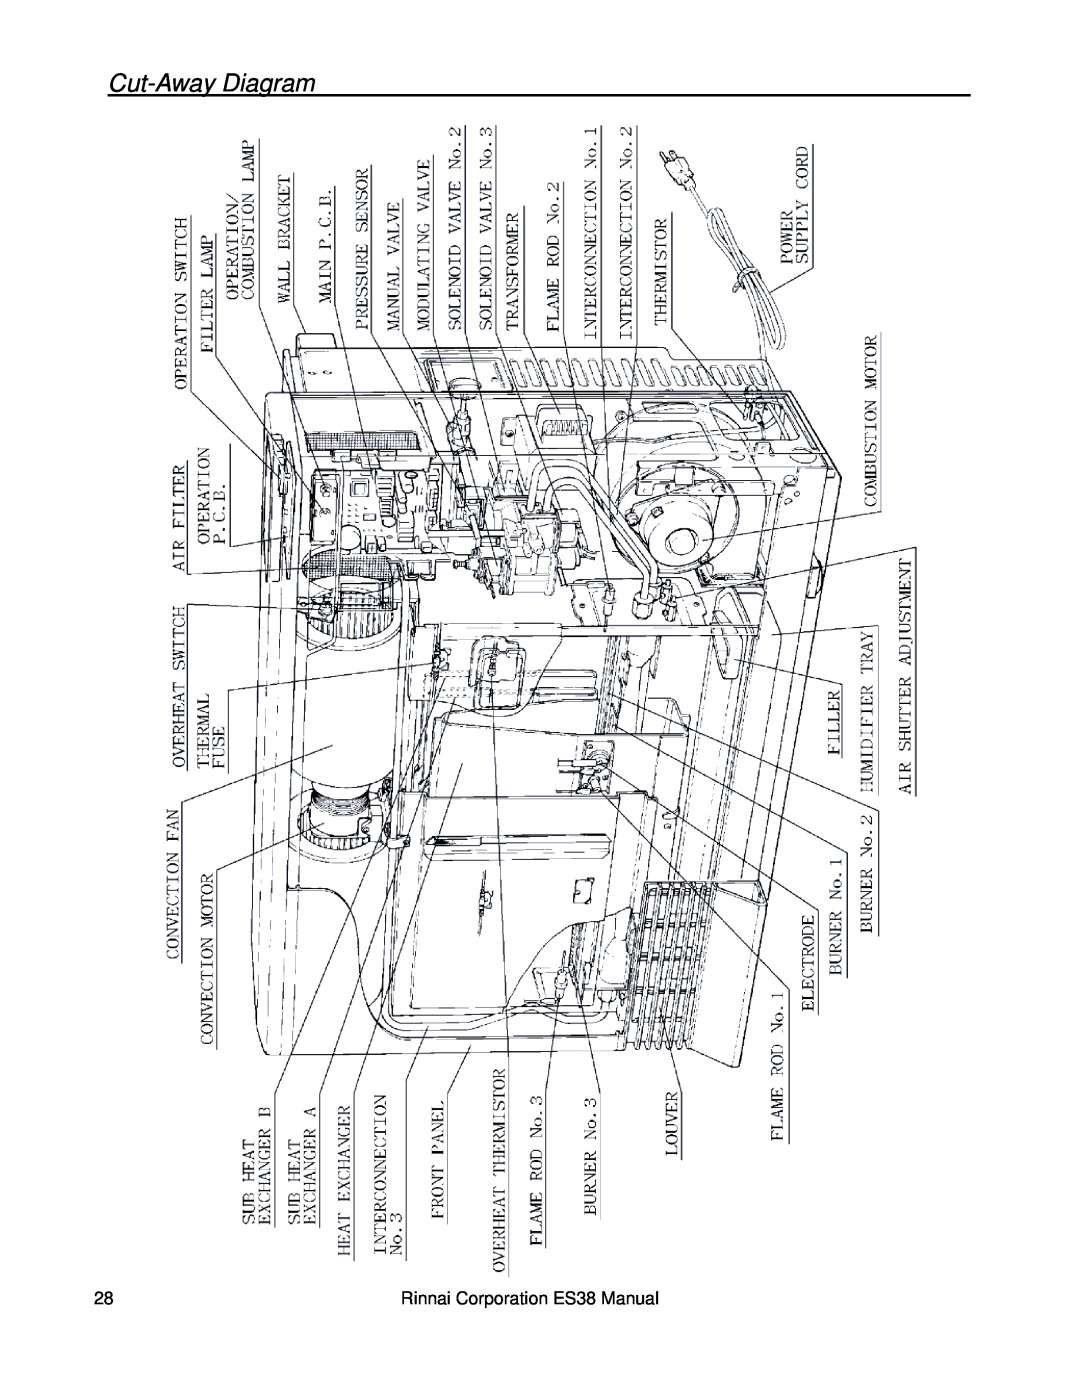 Rinnai installation manual Cut-AwayDiagram, Rinnai Corporation ES38 Manual 